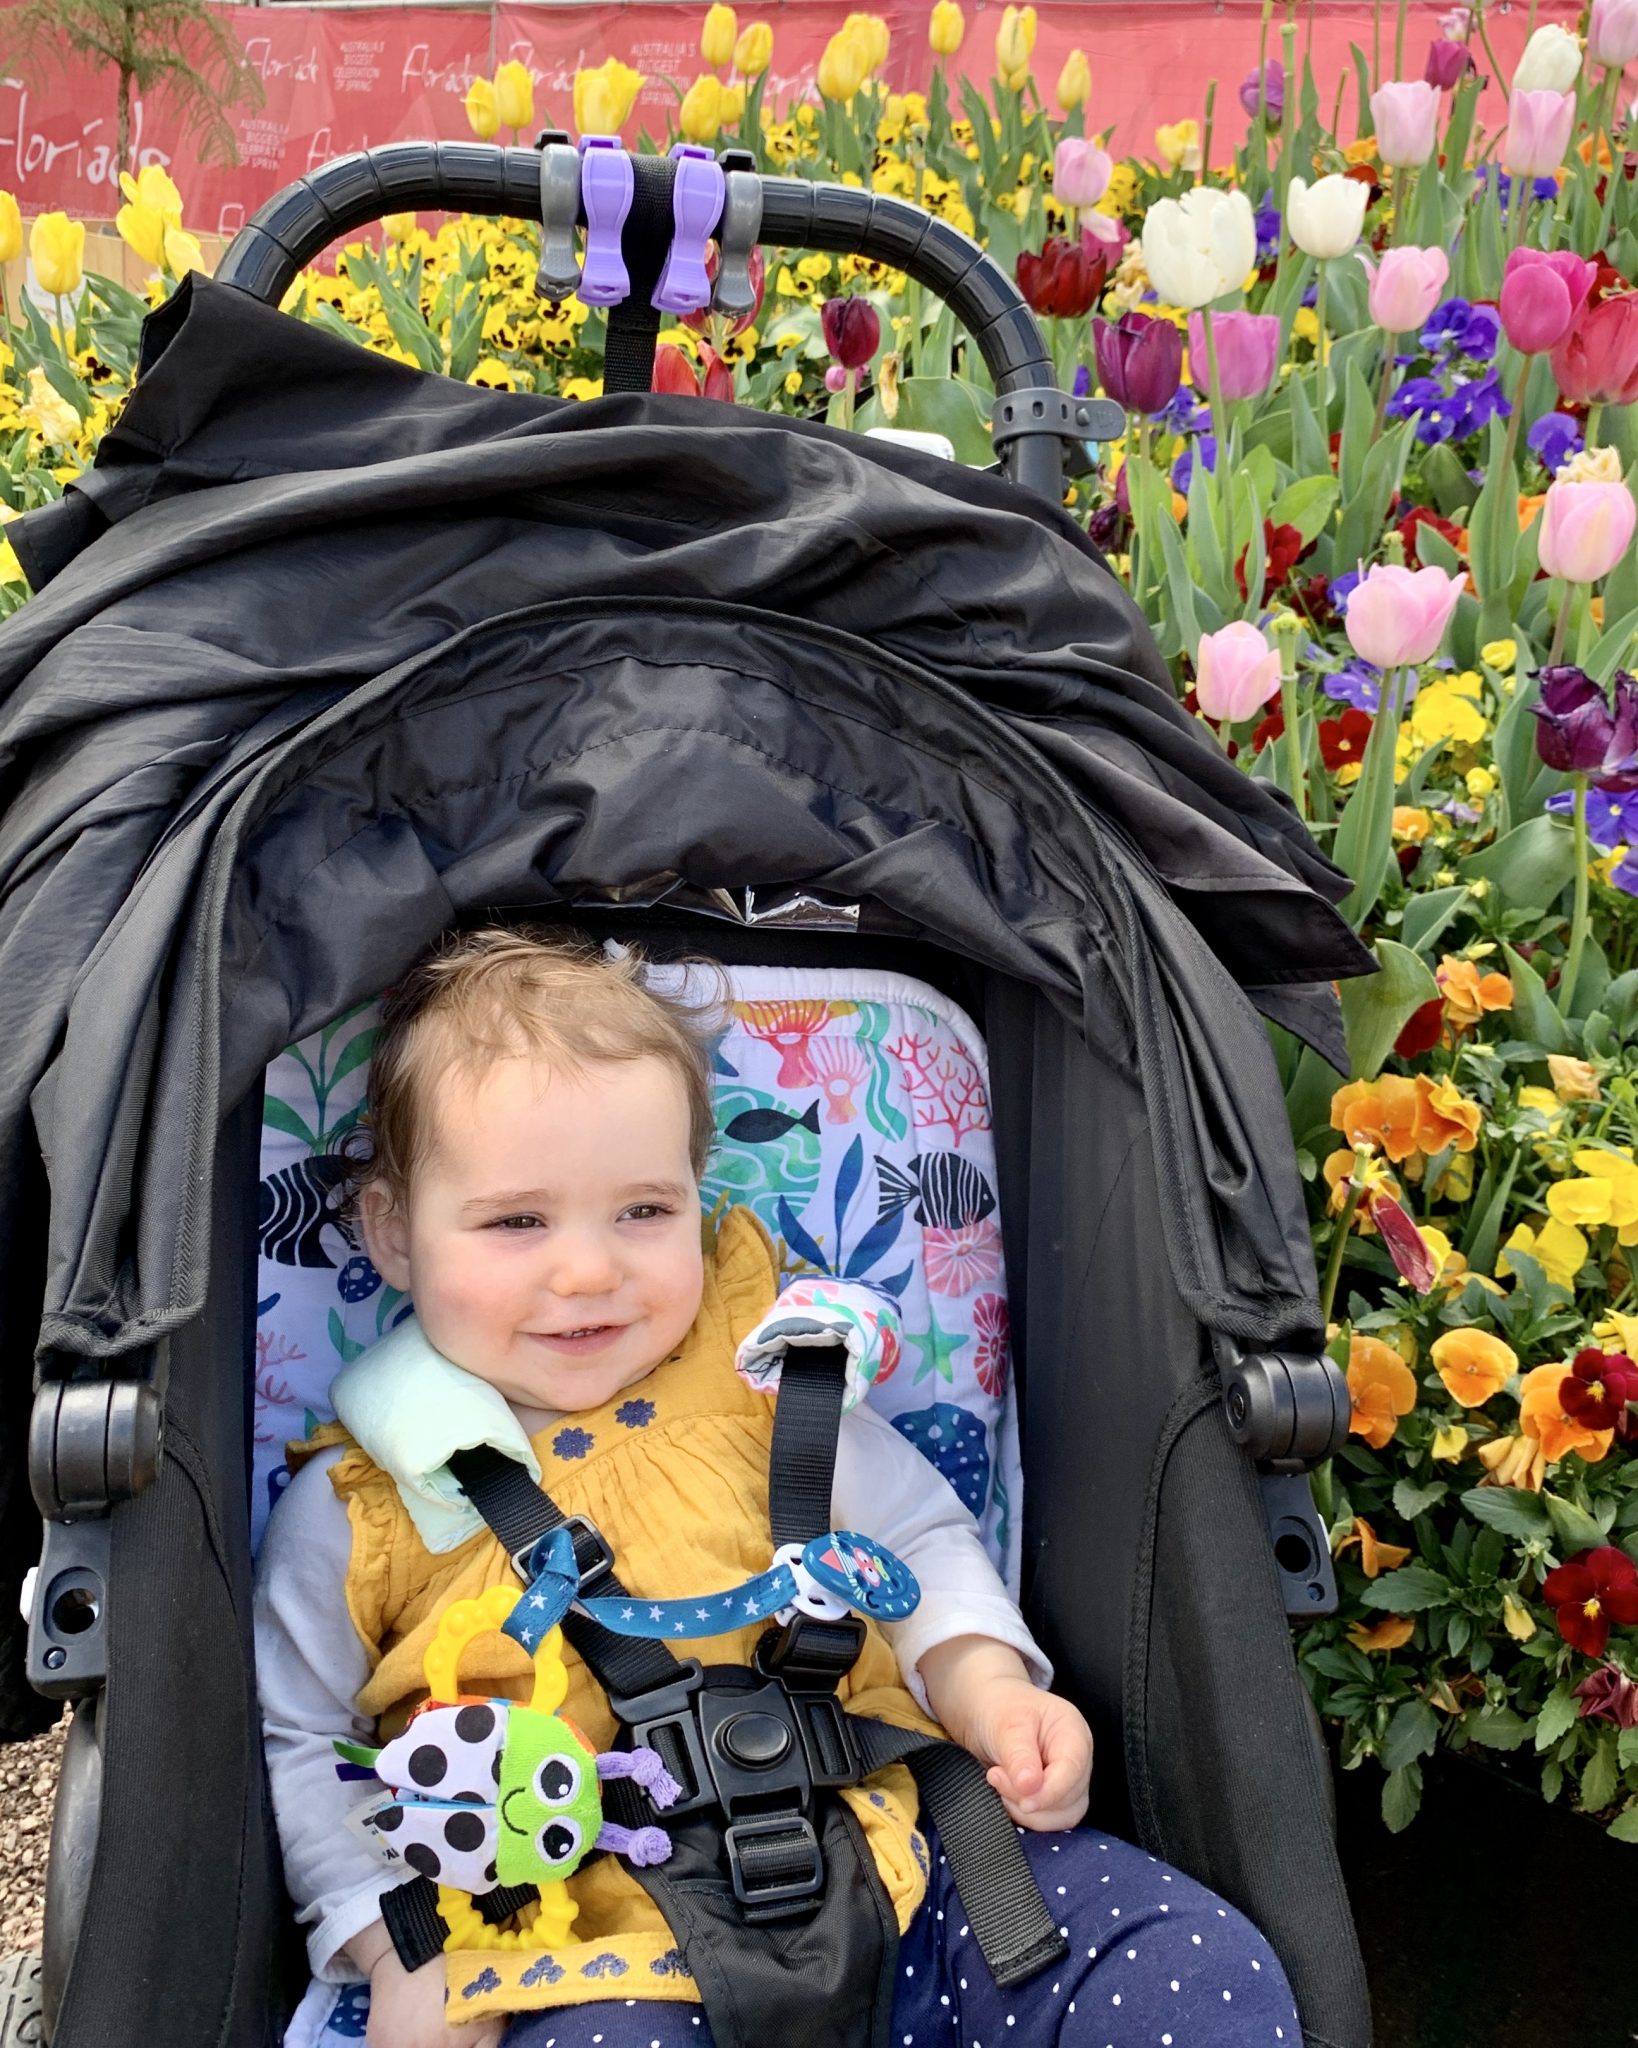 Emilia enjoyed the pretty flowers at Floriade